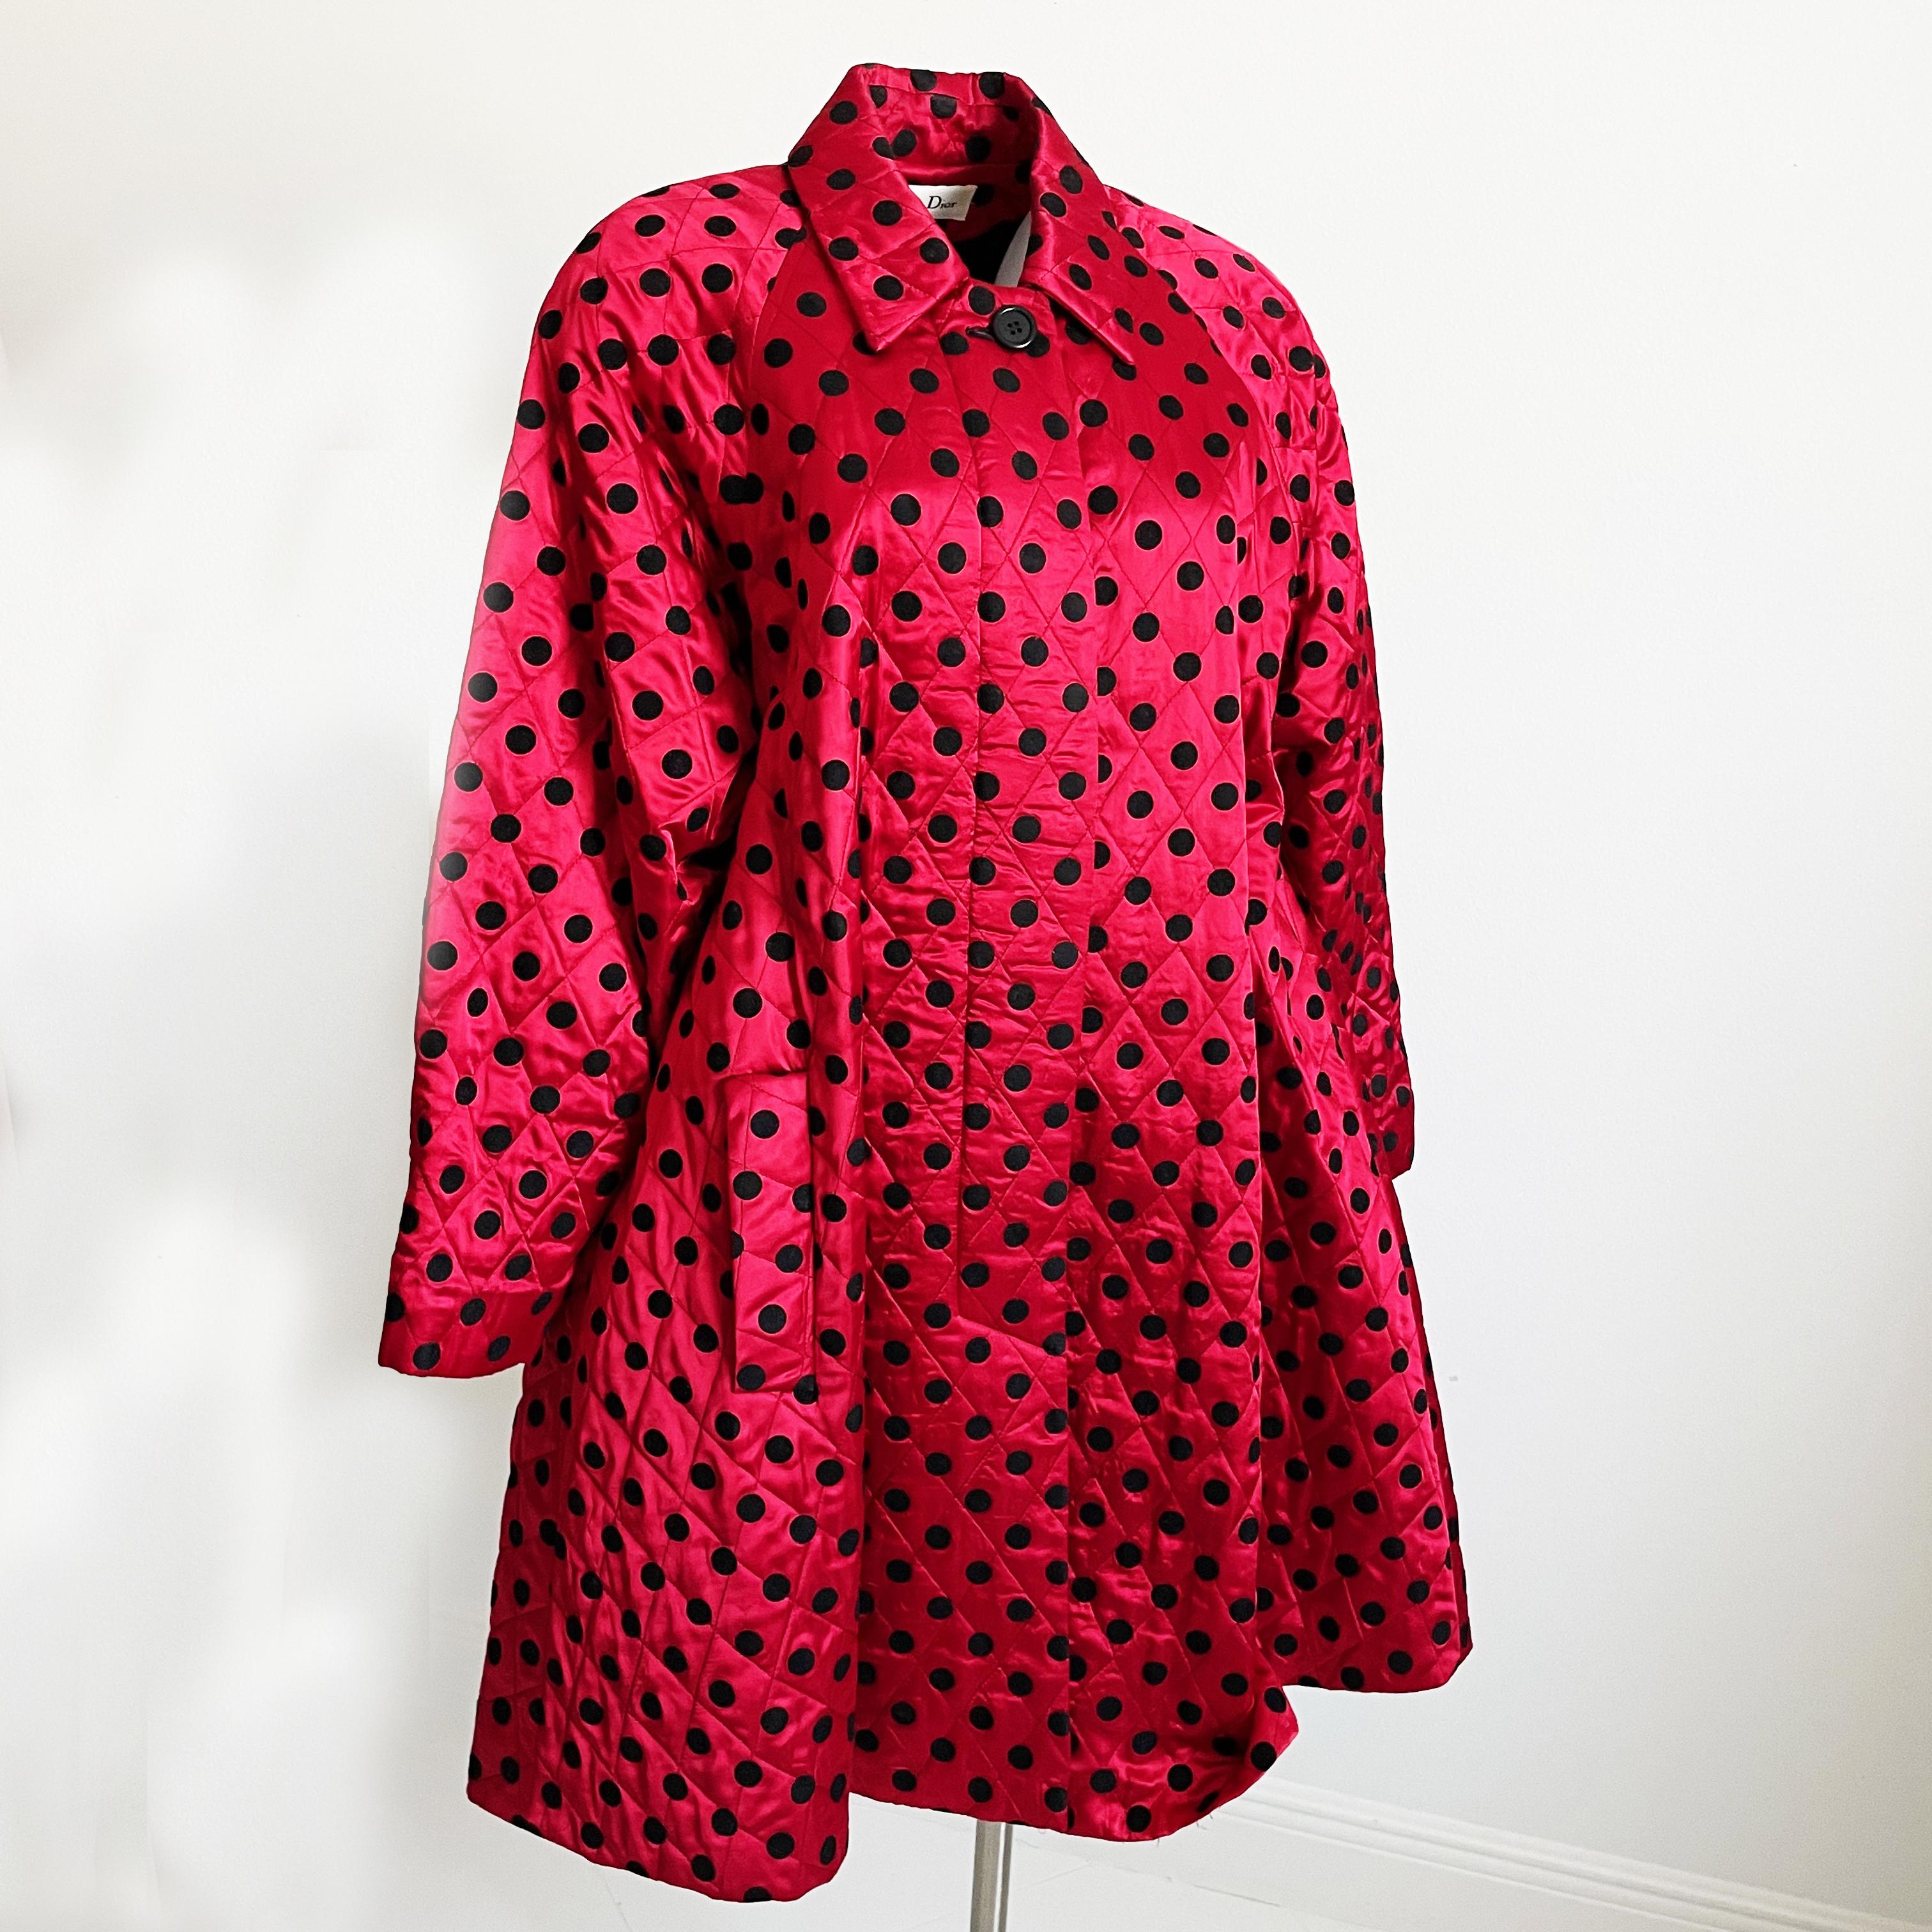 Christian Dior Coat Swing Style Red Satin Black Polka Dot Evening Wear Vintage  For Sale 1